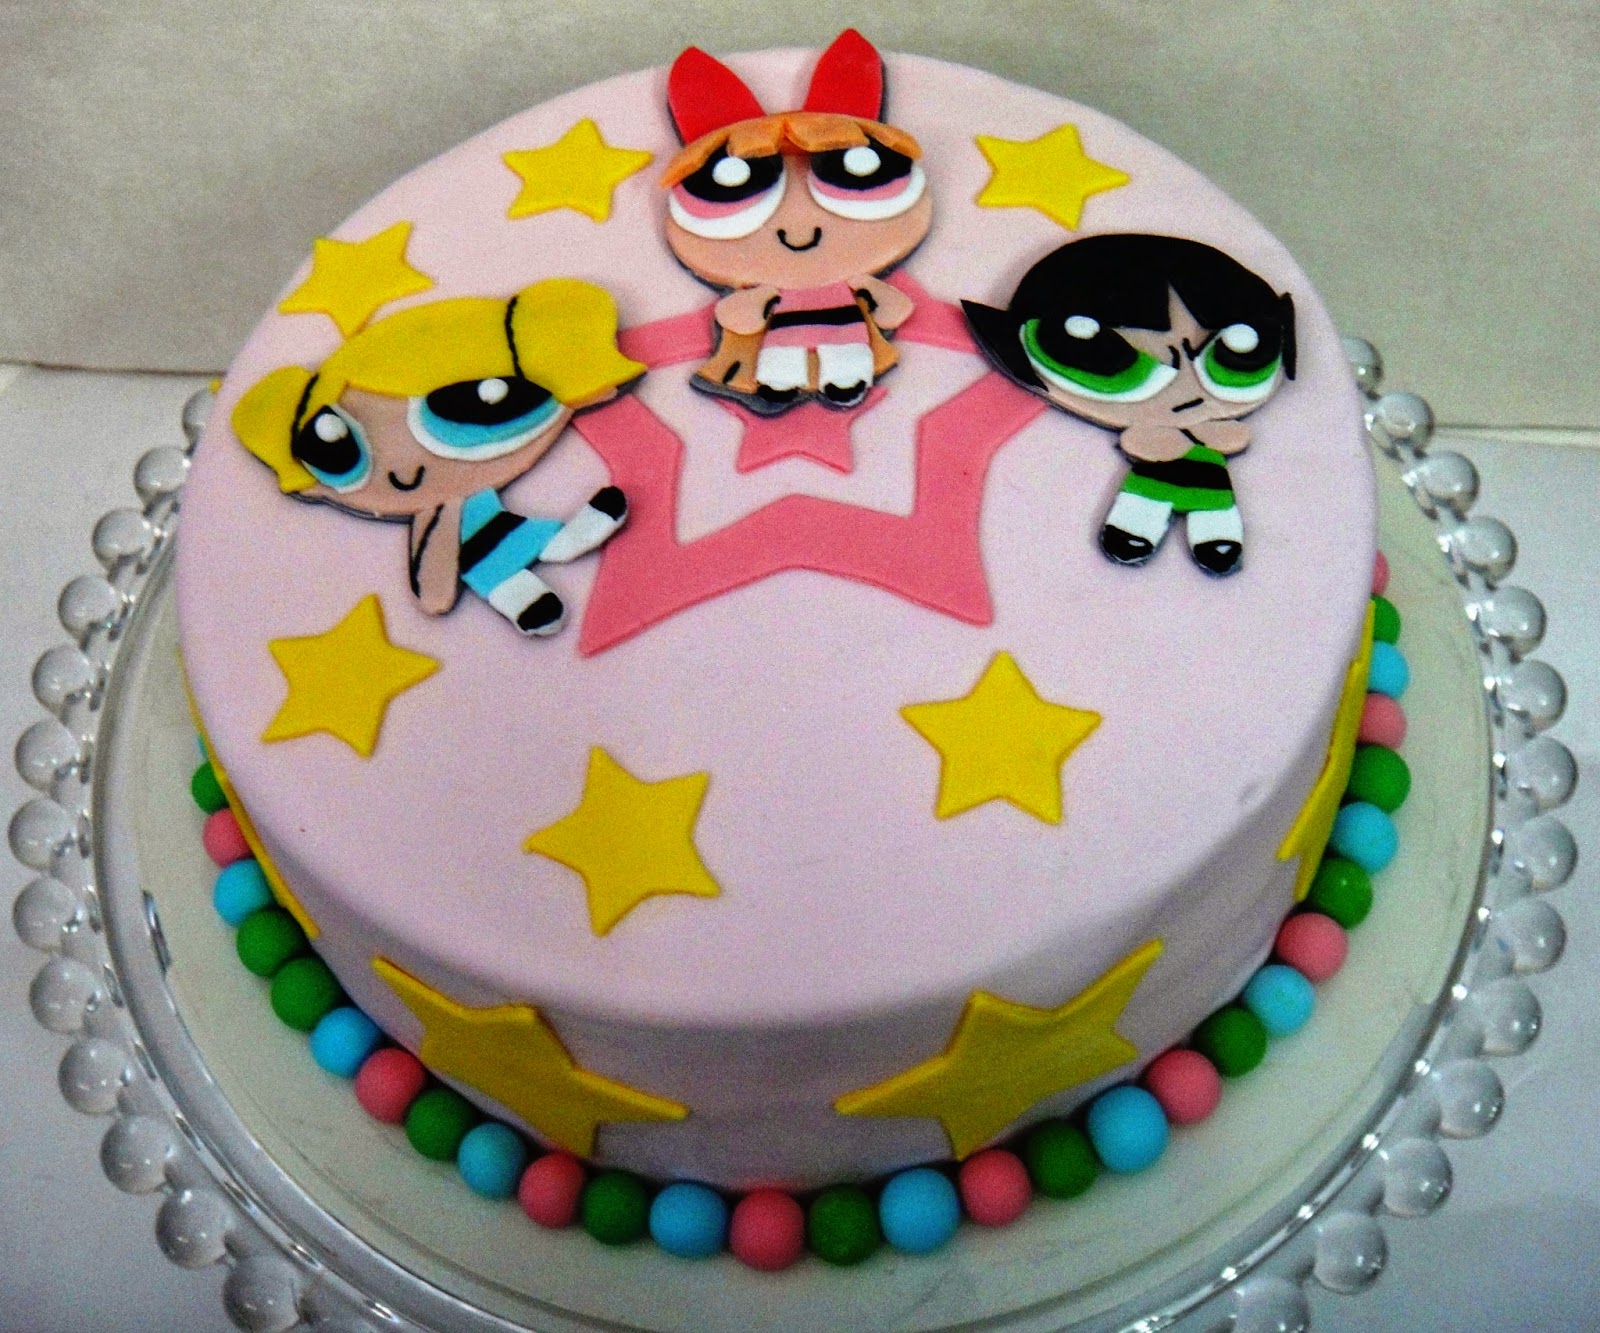 Image result for powerpuff girls cake